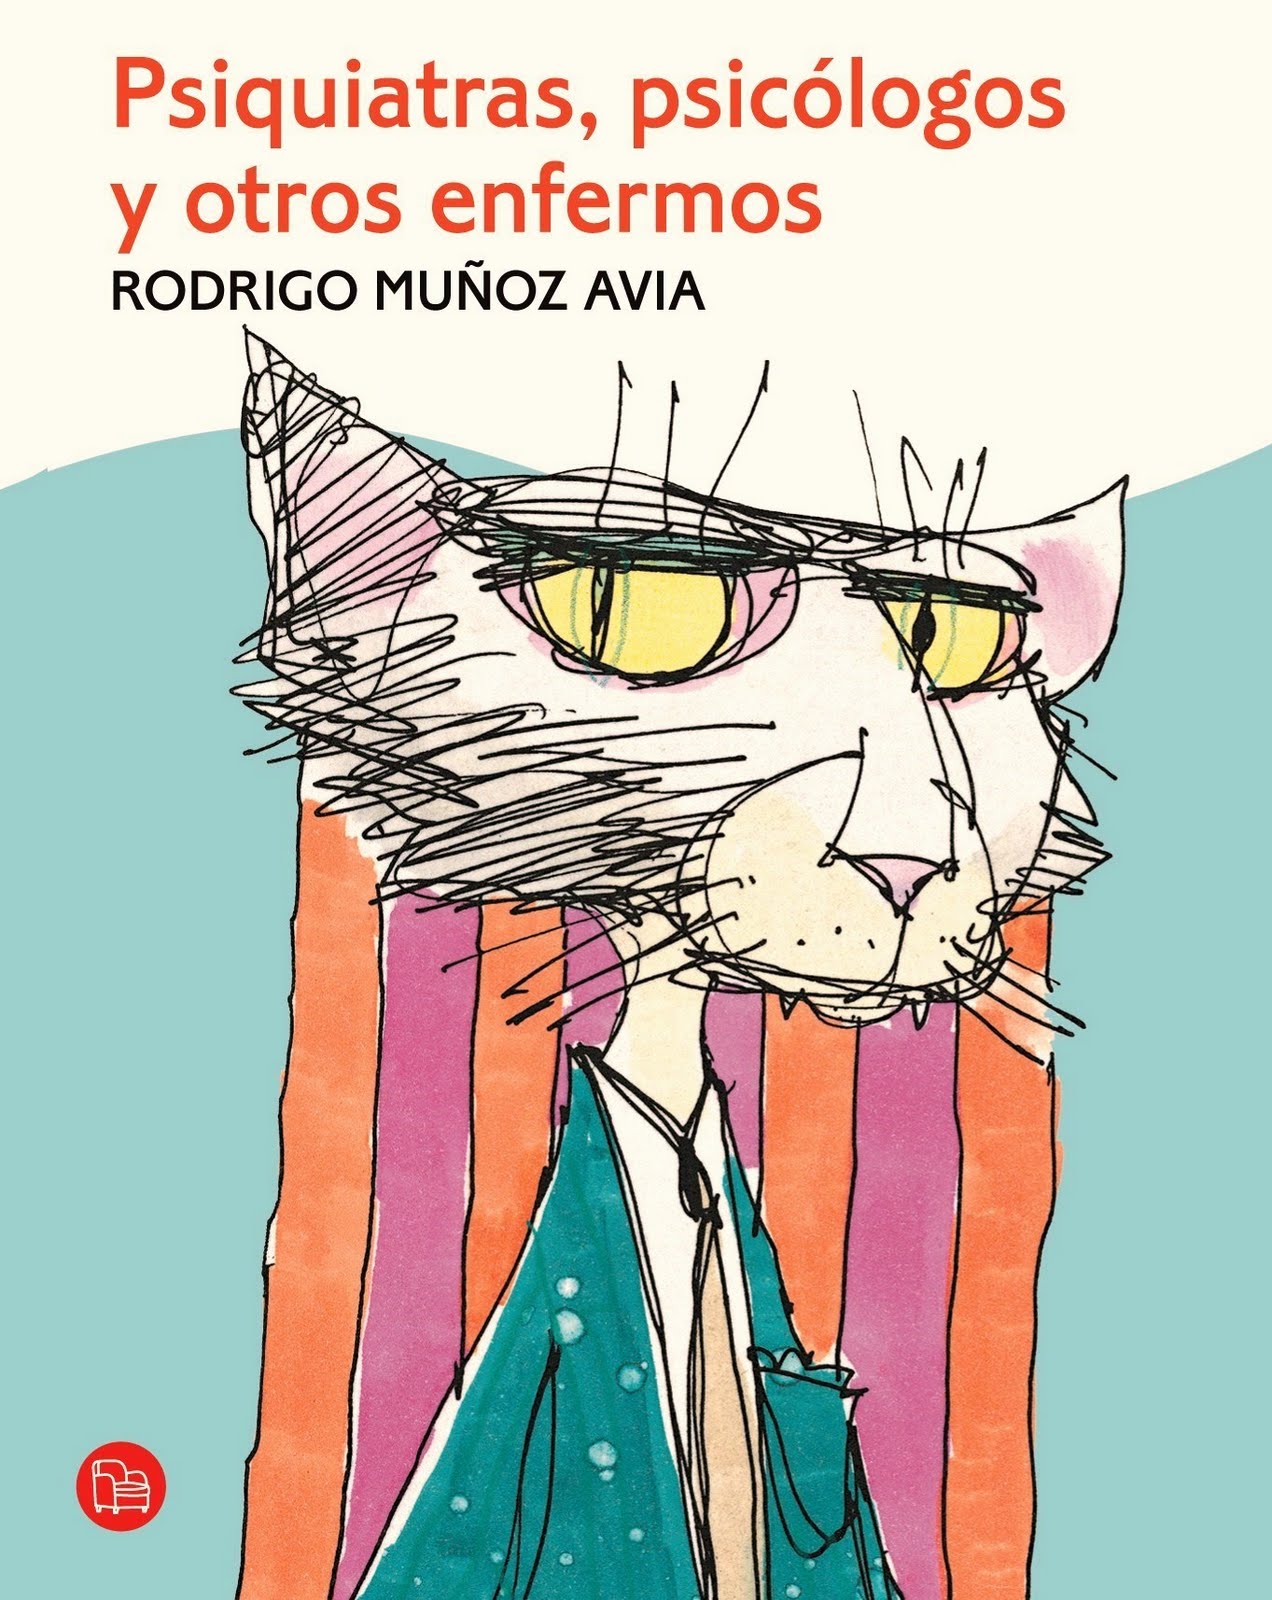 Rodrigo Muñoz Avia: Psiquiatras, psicólogos y otros enfermos (Spanish language, 2005, Alfaguara)